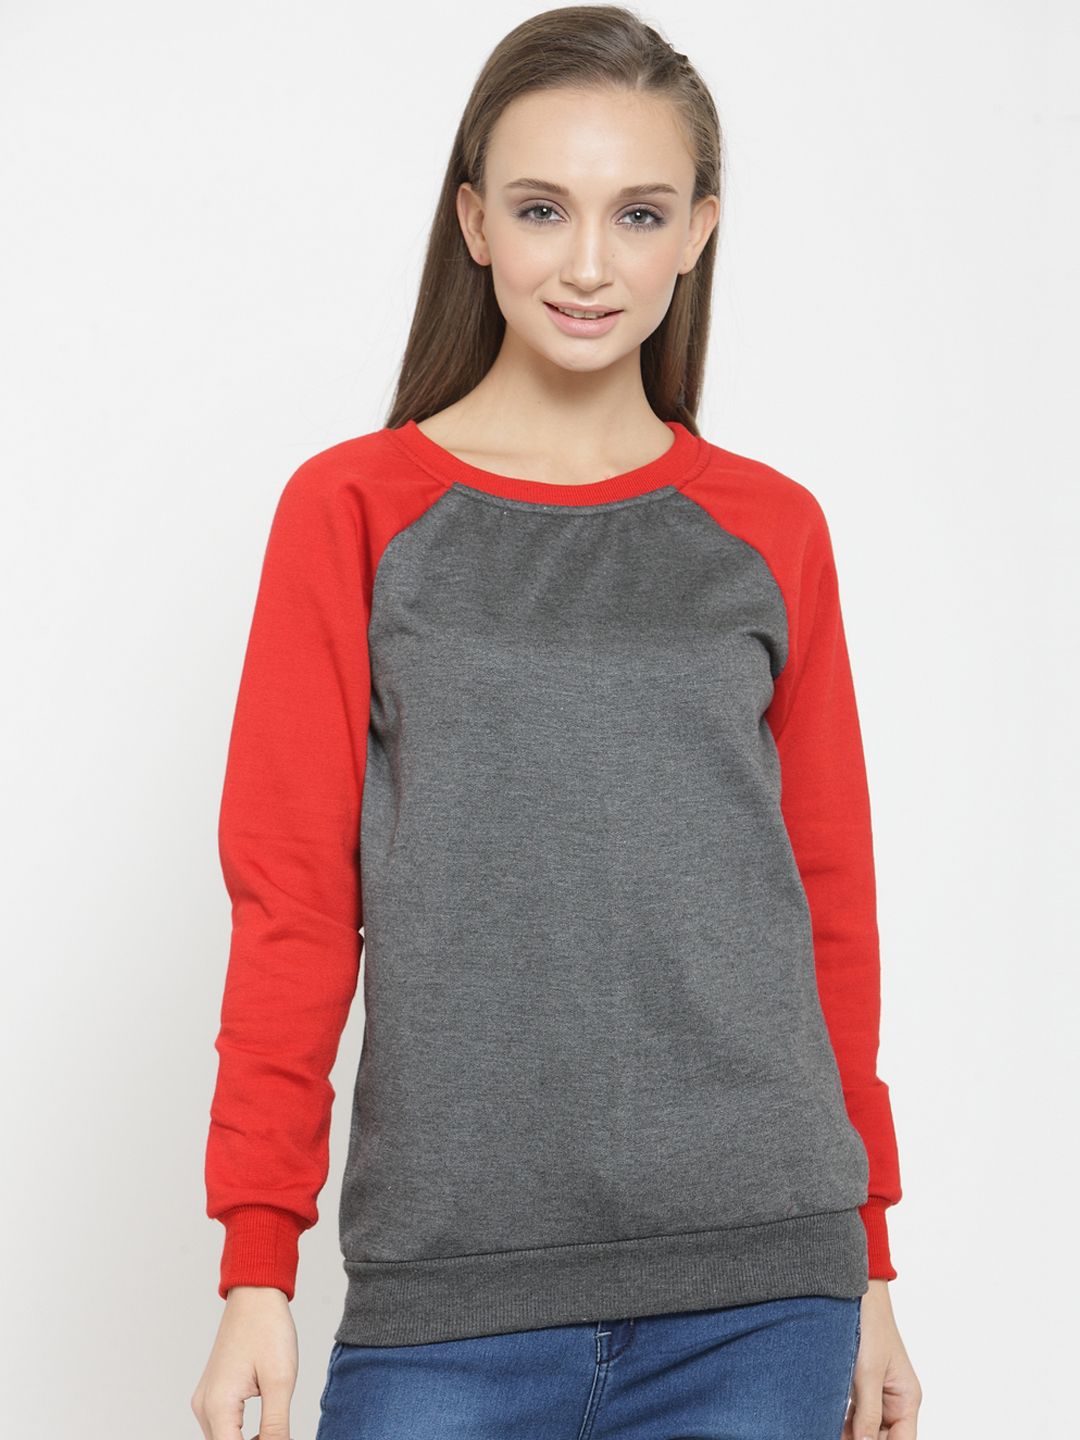 Belle Fille Women Grey & Red Colourblocked Sweatshirt Price in India